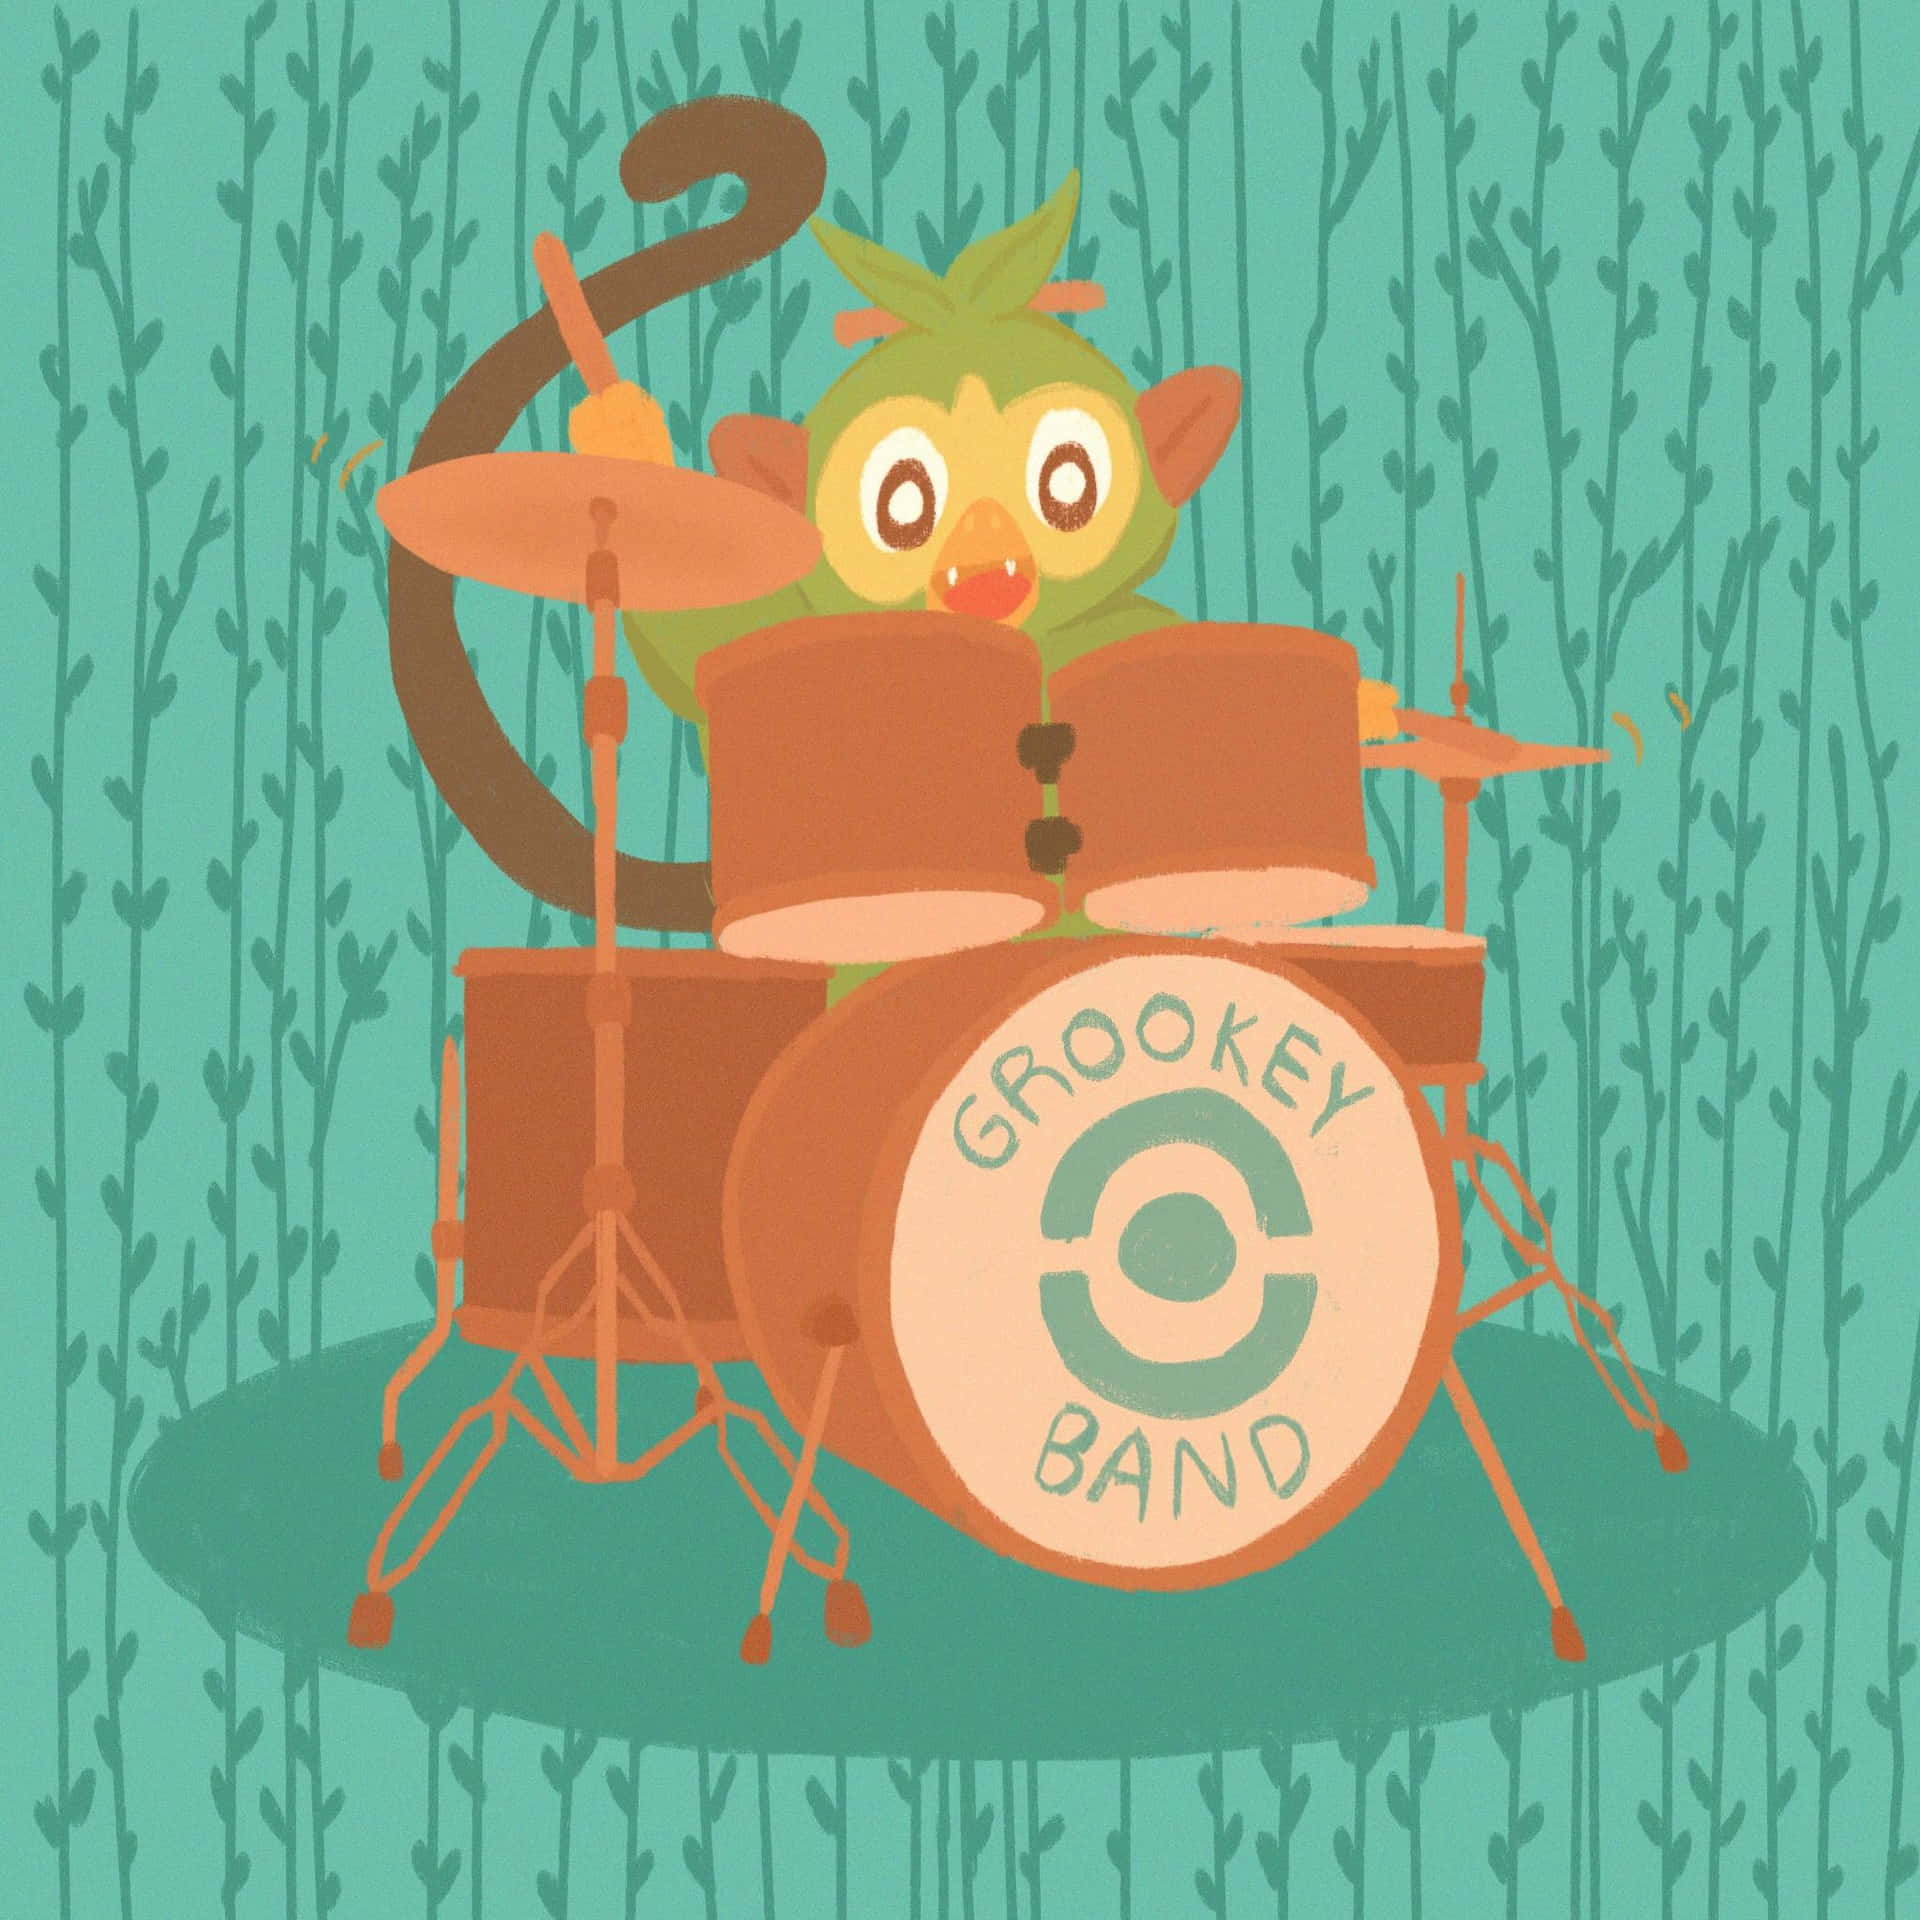 Grookey Drumming Band Illustration Wallpaper